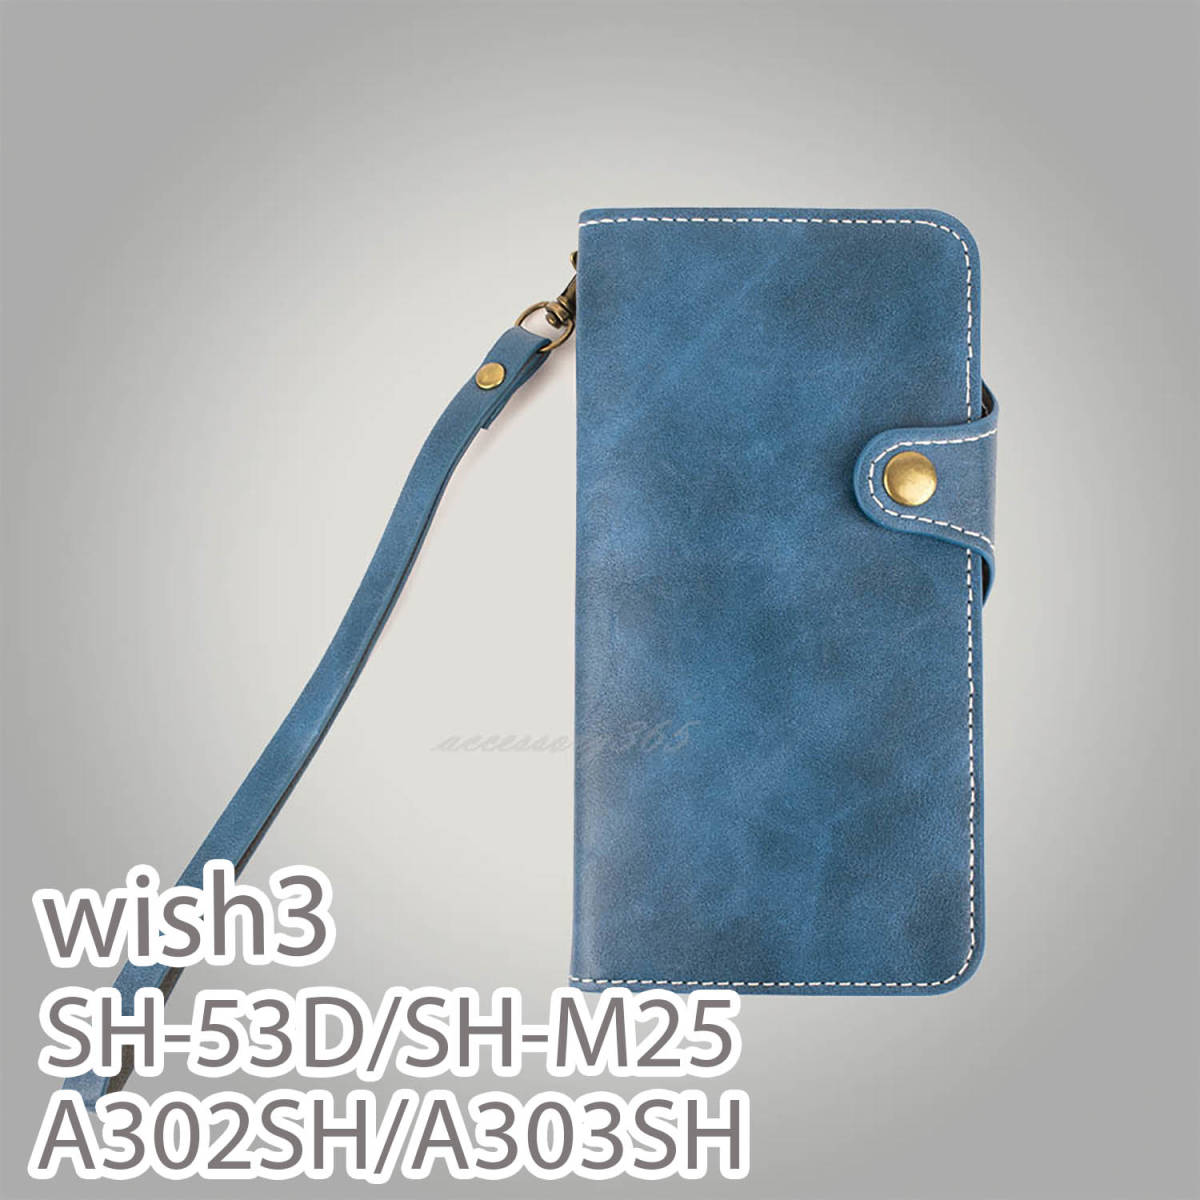 AQUOS wish3 ケース 手帳型 おしゃれ シンプル ブルー 青色 SH53D A302SH A303SH SHM25 カバー スマホケース 人気 レザー 送料無料 Blue 安_画像1